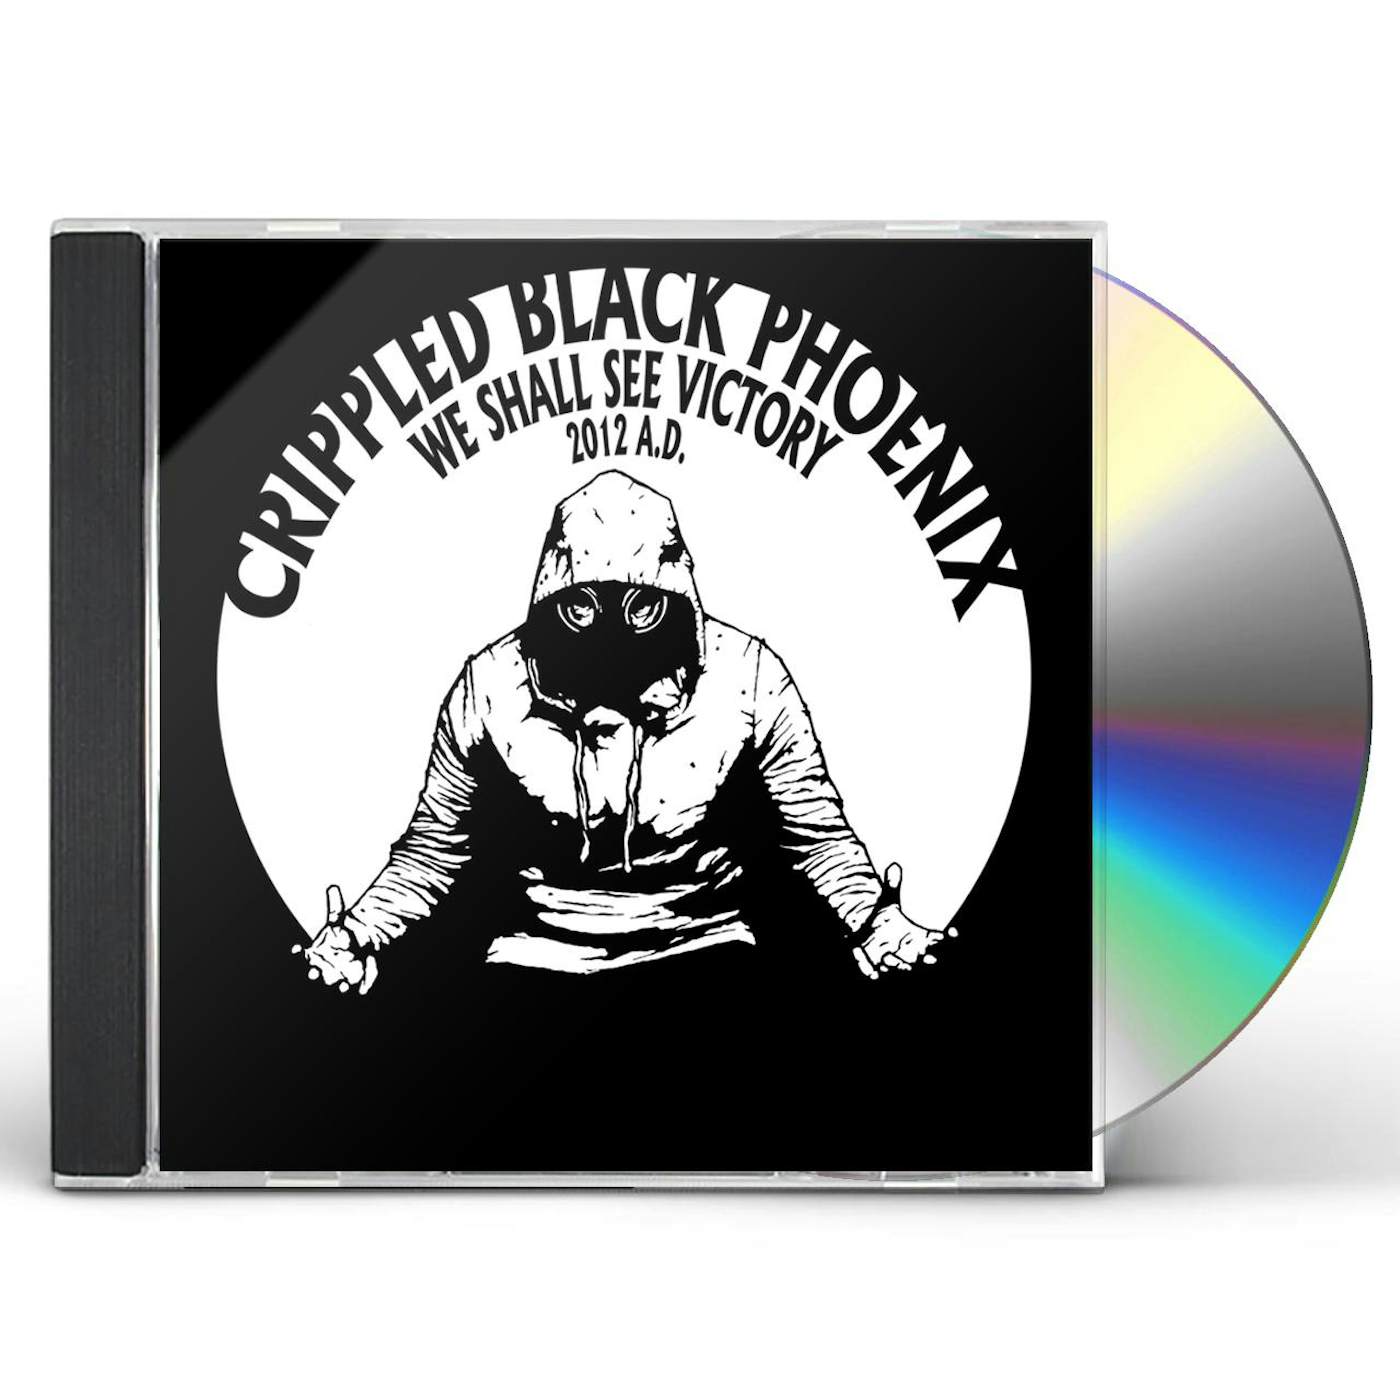 Crippled Black Phoenix WE SHALL SEE VICTORY CD